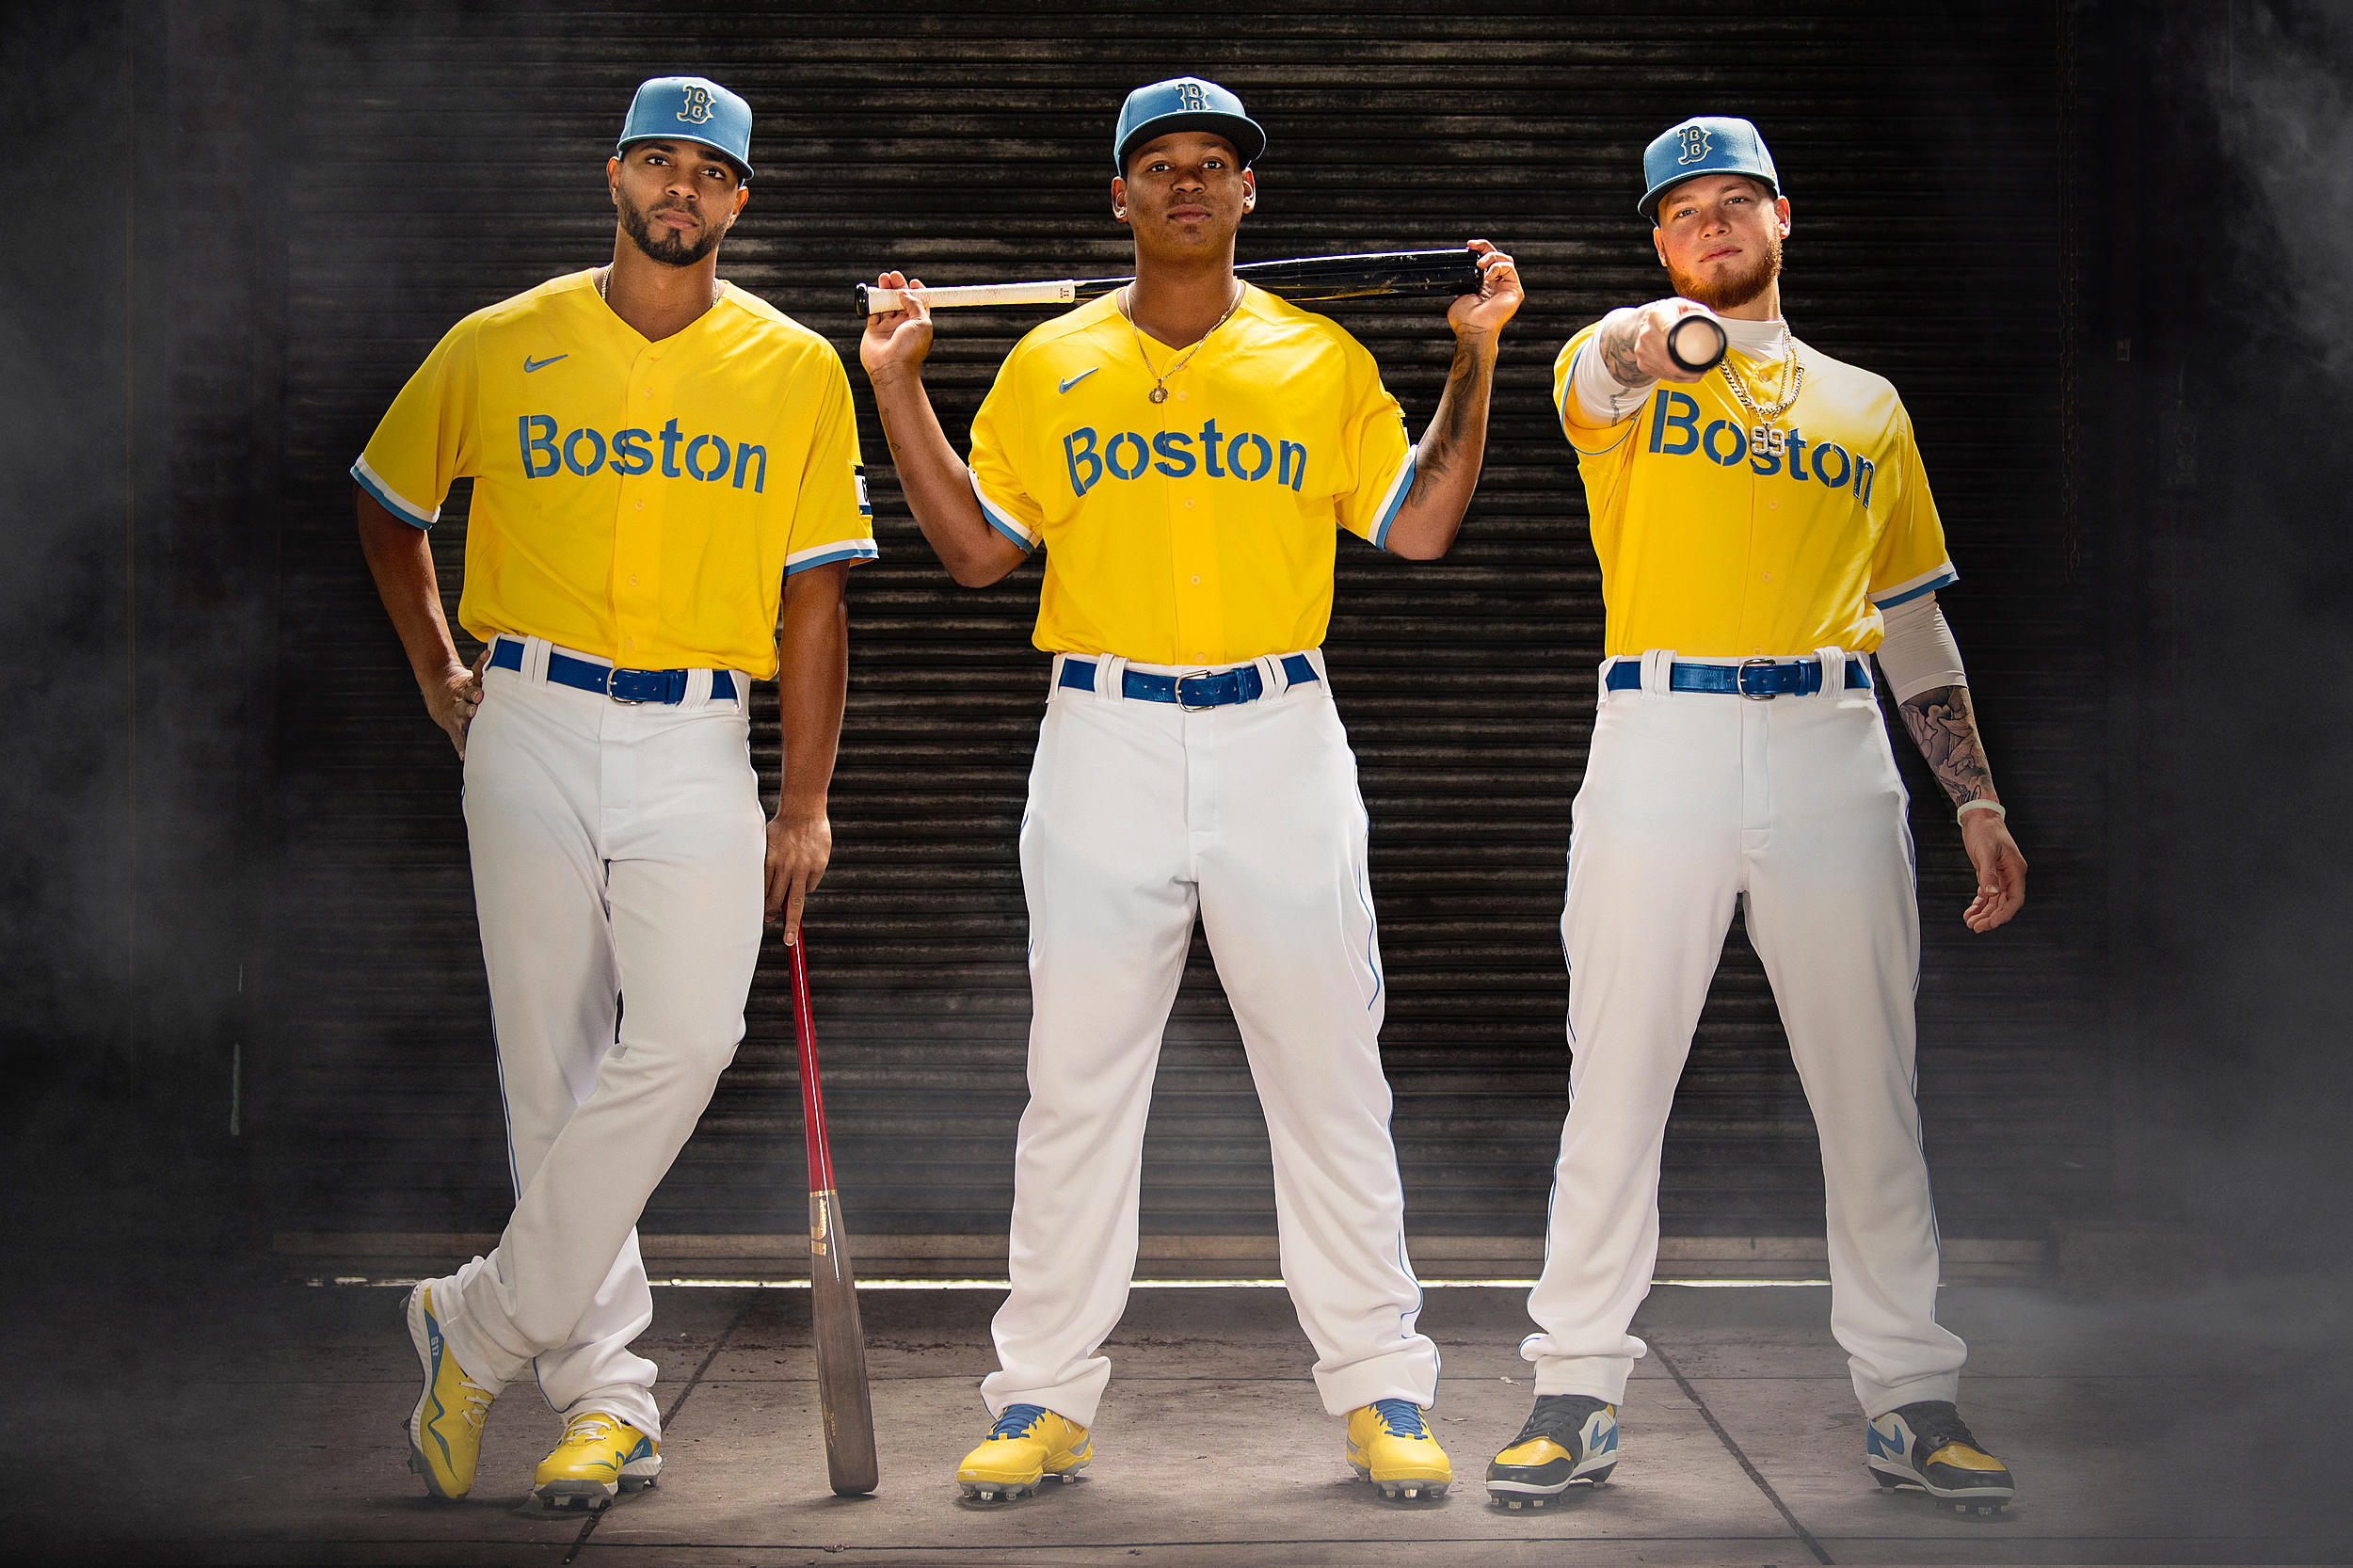 Astros unveil new uniforms for 2013